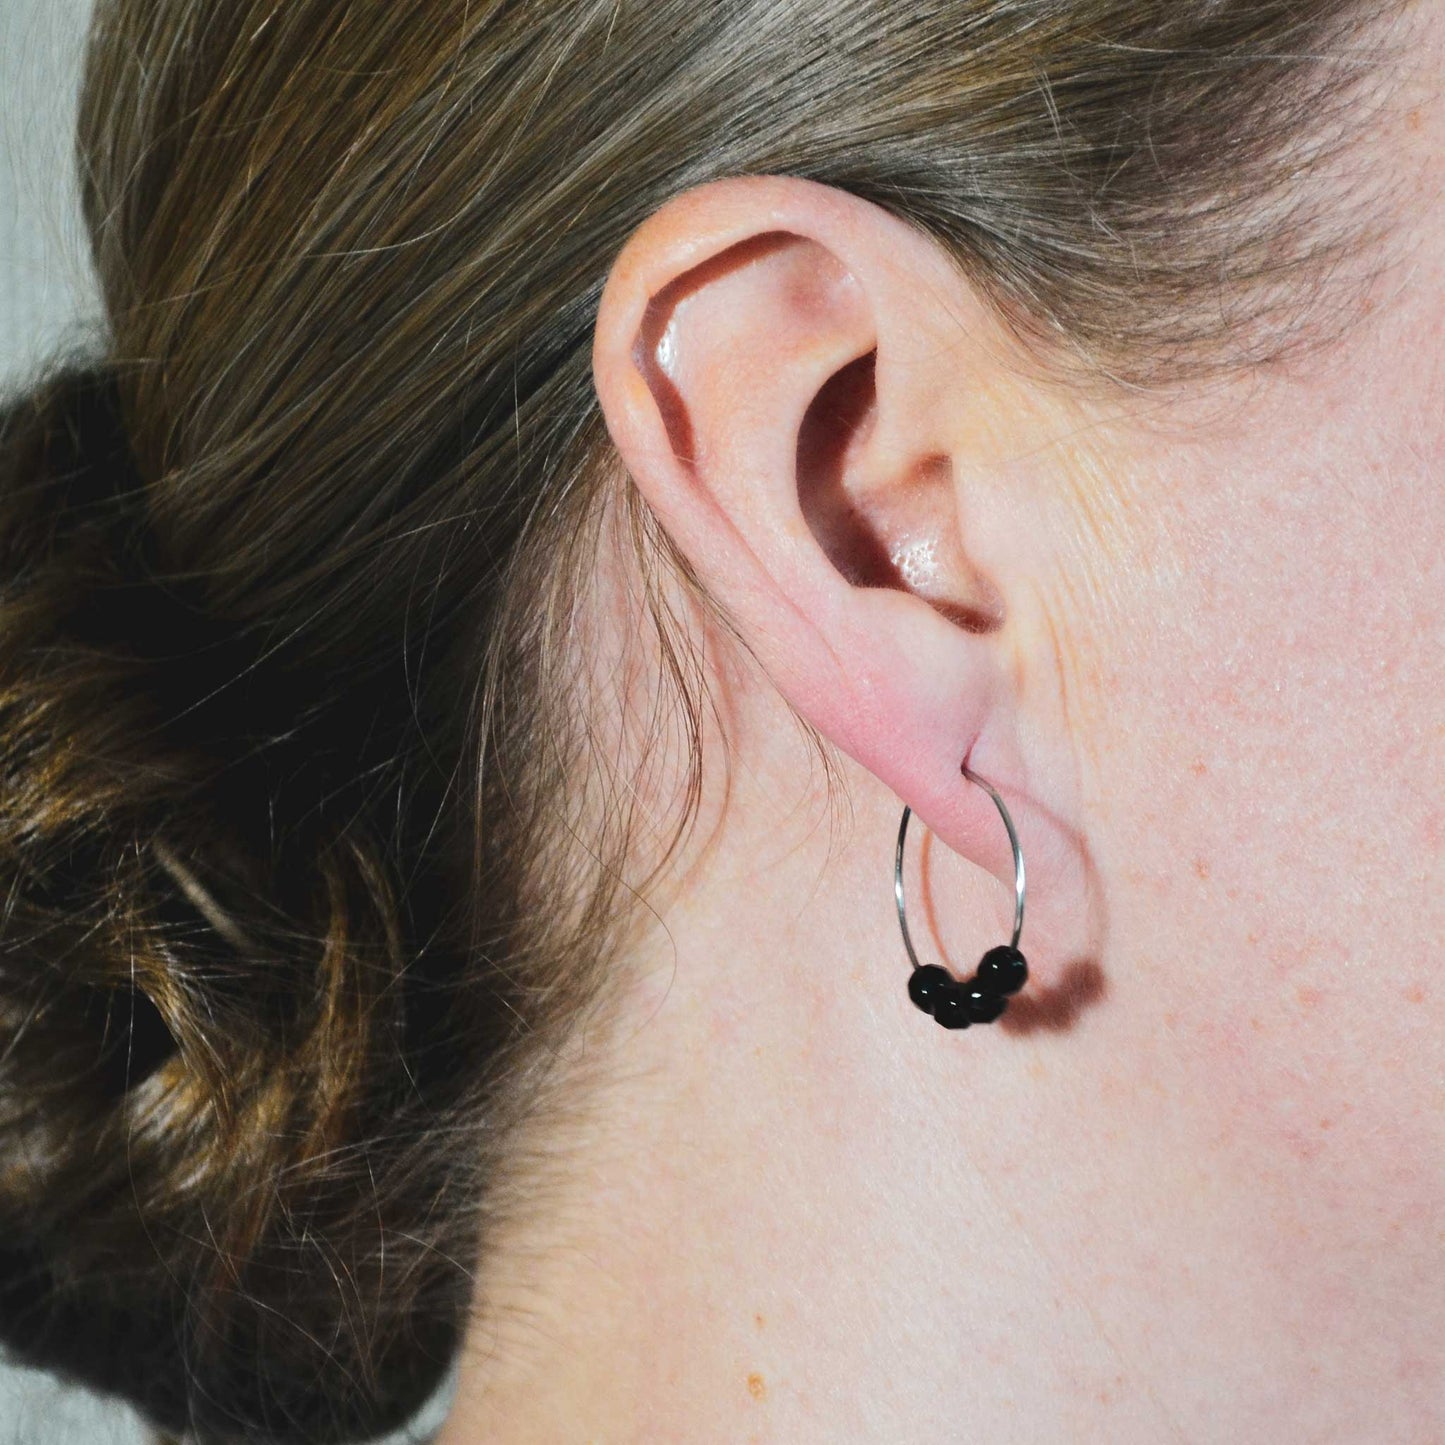 Woman wearing simple Onyx black hoop earring in earlobe